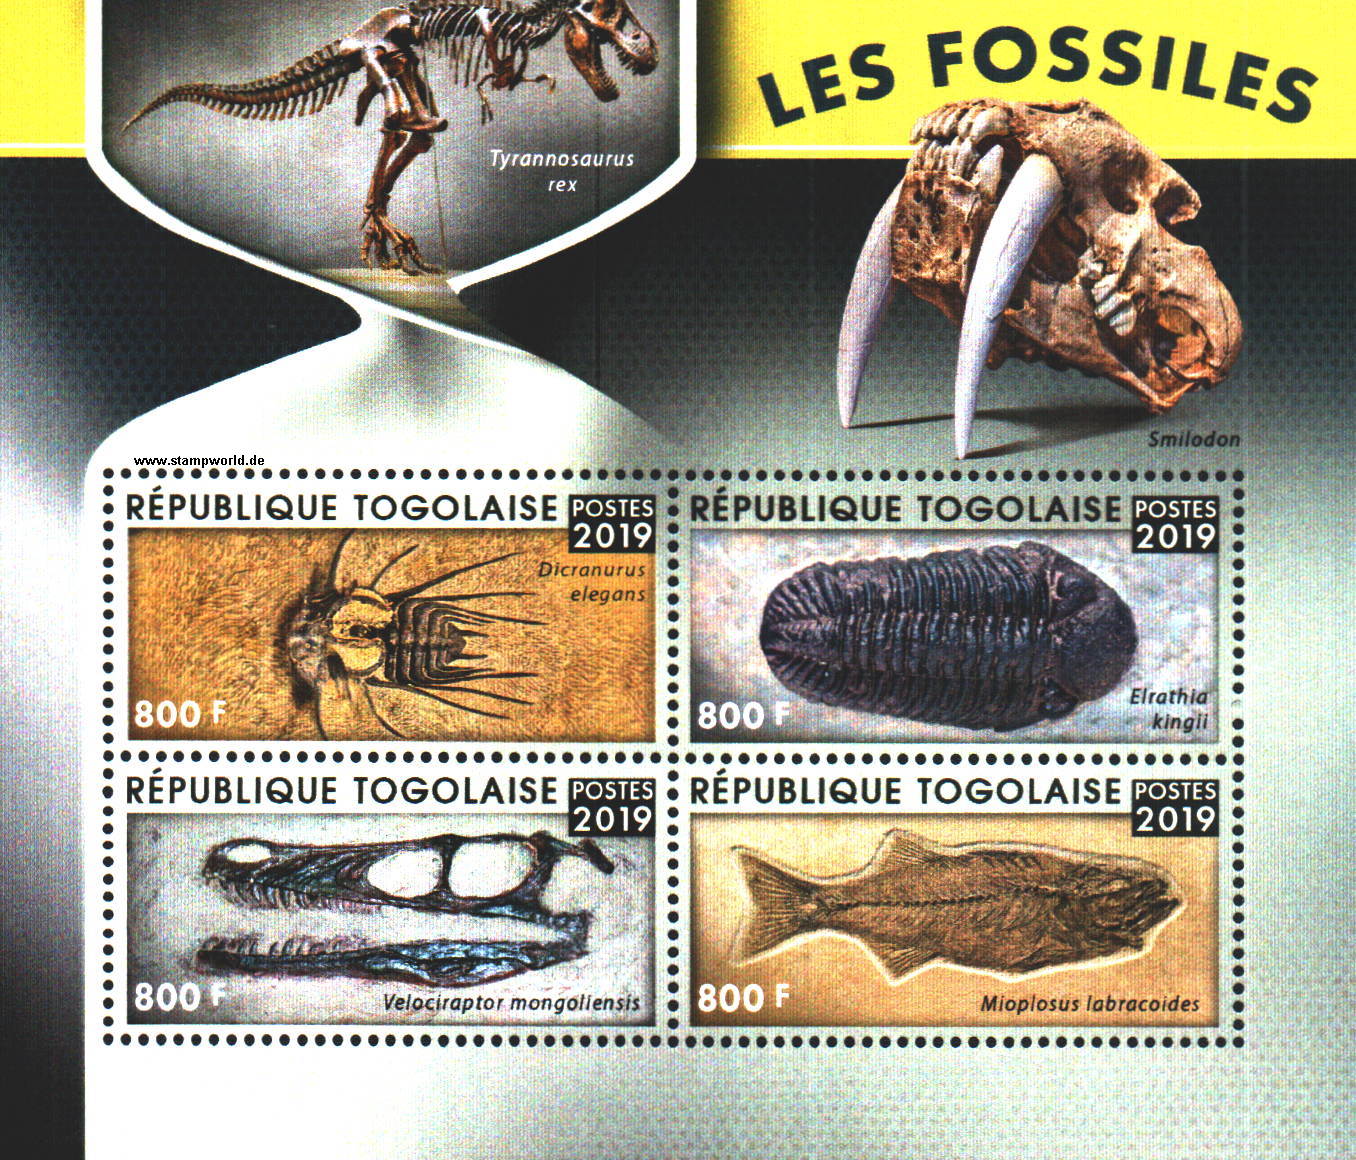 Stampworld com каталог. Почтовые марки археология. Post stamp Archaeology.